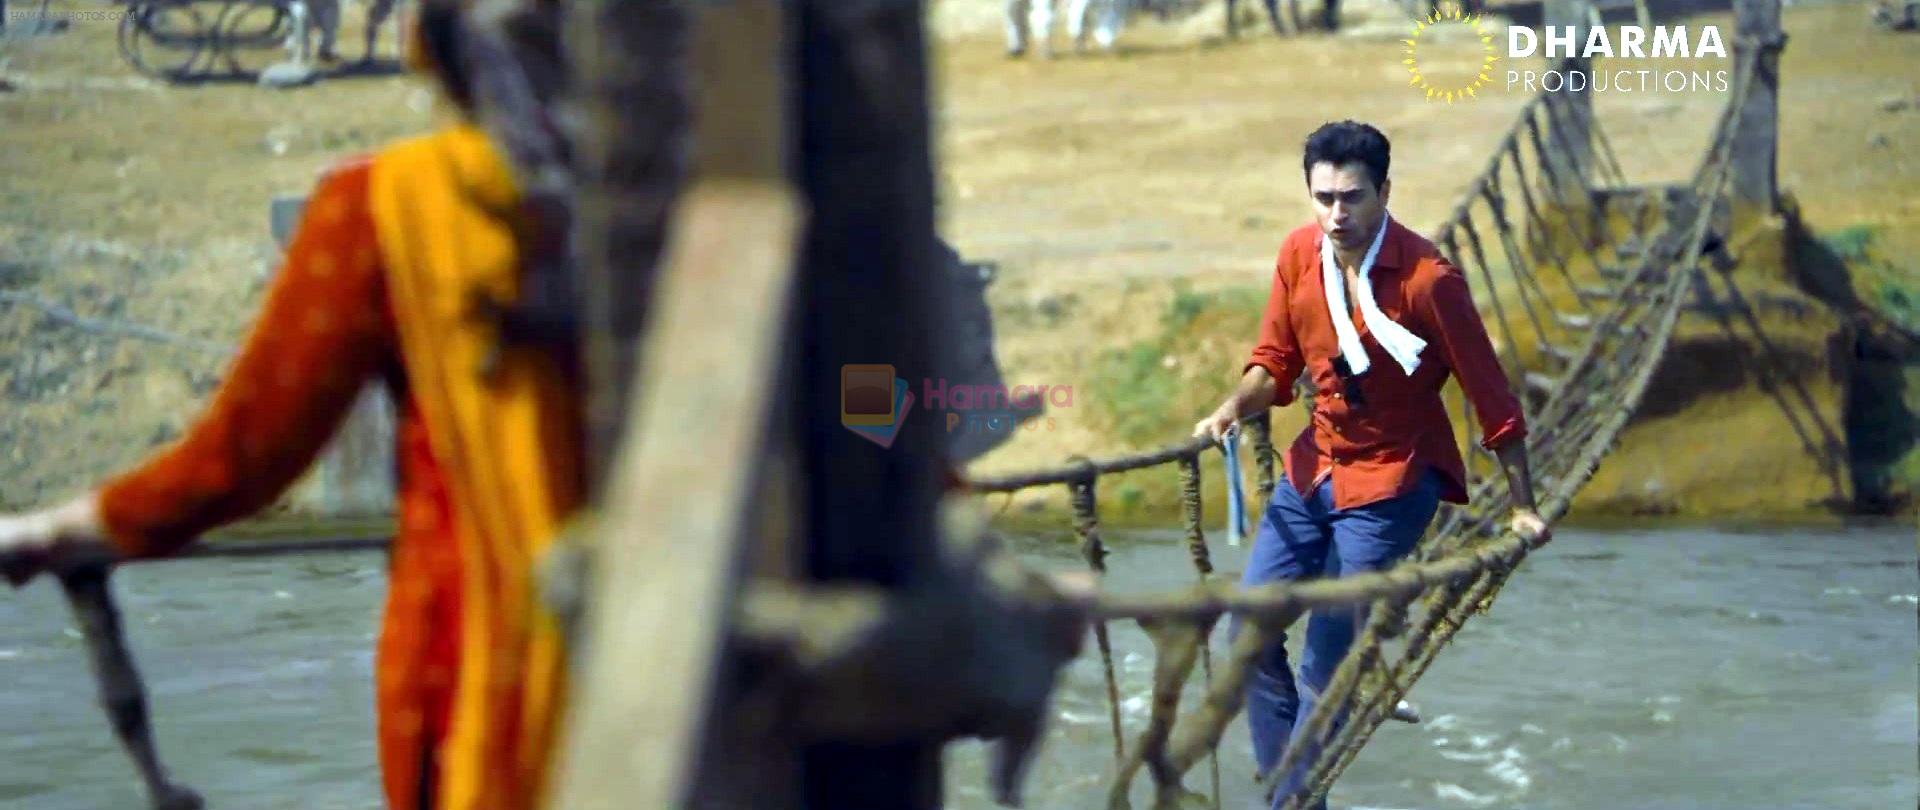 Imran Khan, Kareena Kapoor in still from the movie Gori Tere Pyaar Mein